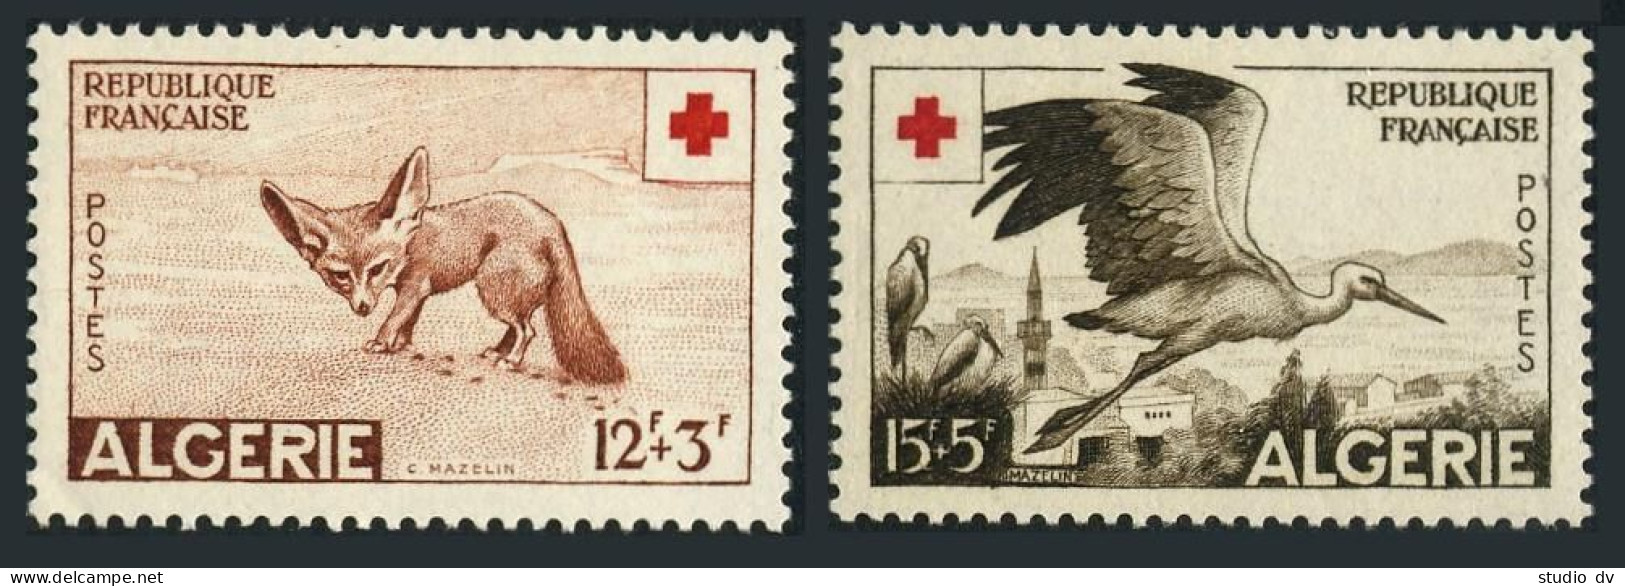 Algeria B88-B89, MNH. Michel 365-366. Red Cross 1957: Fennec, Stork. - Algeria (1962-...)